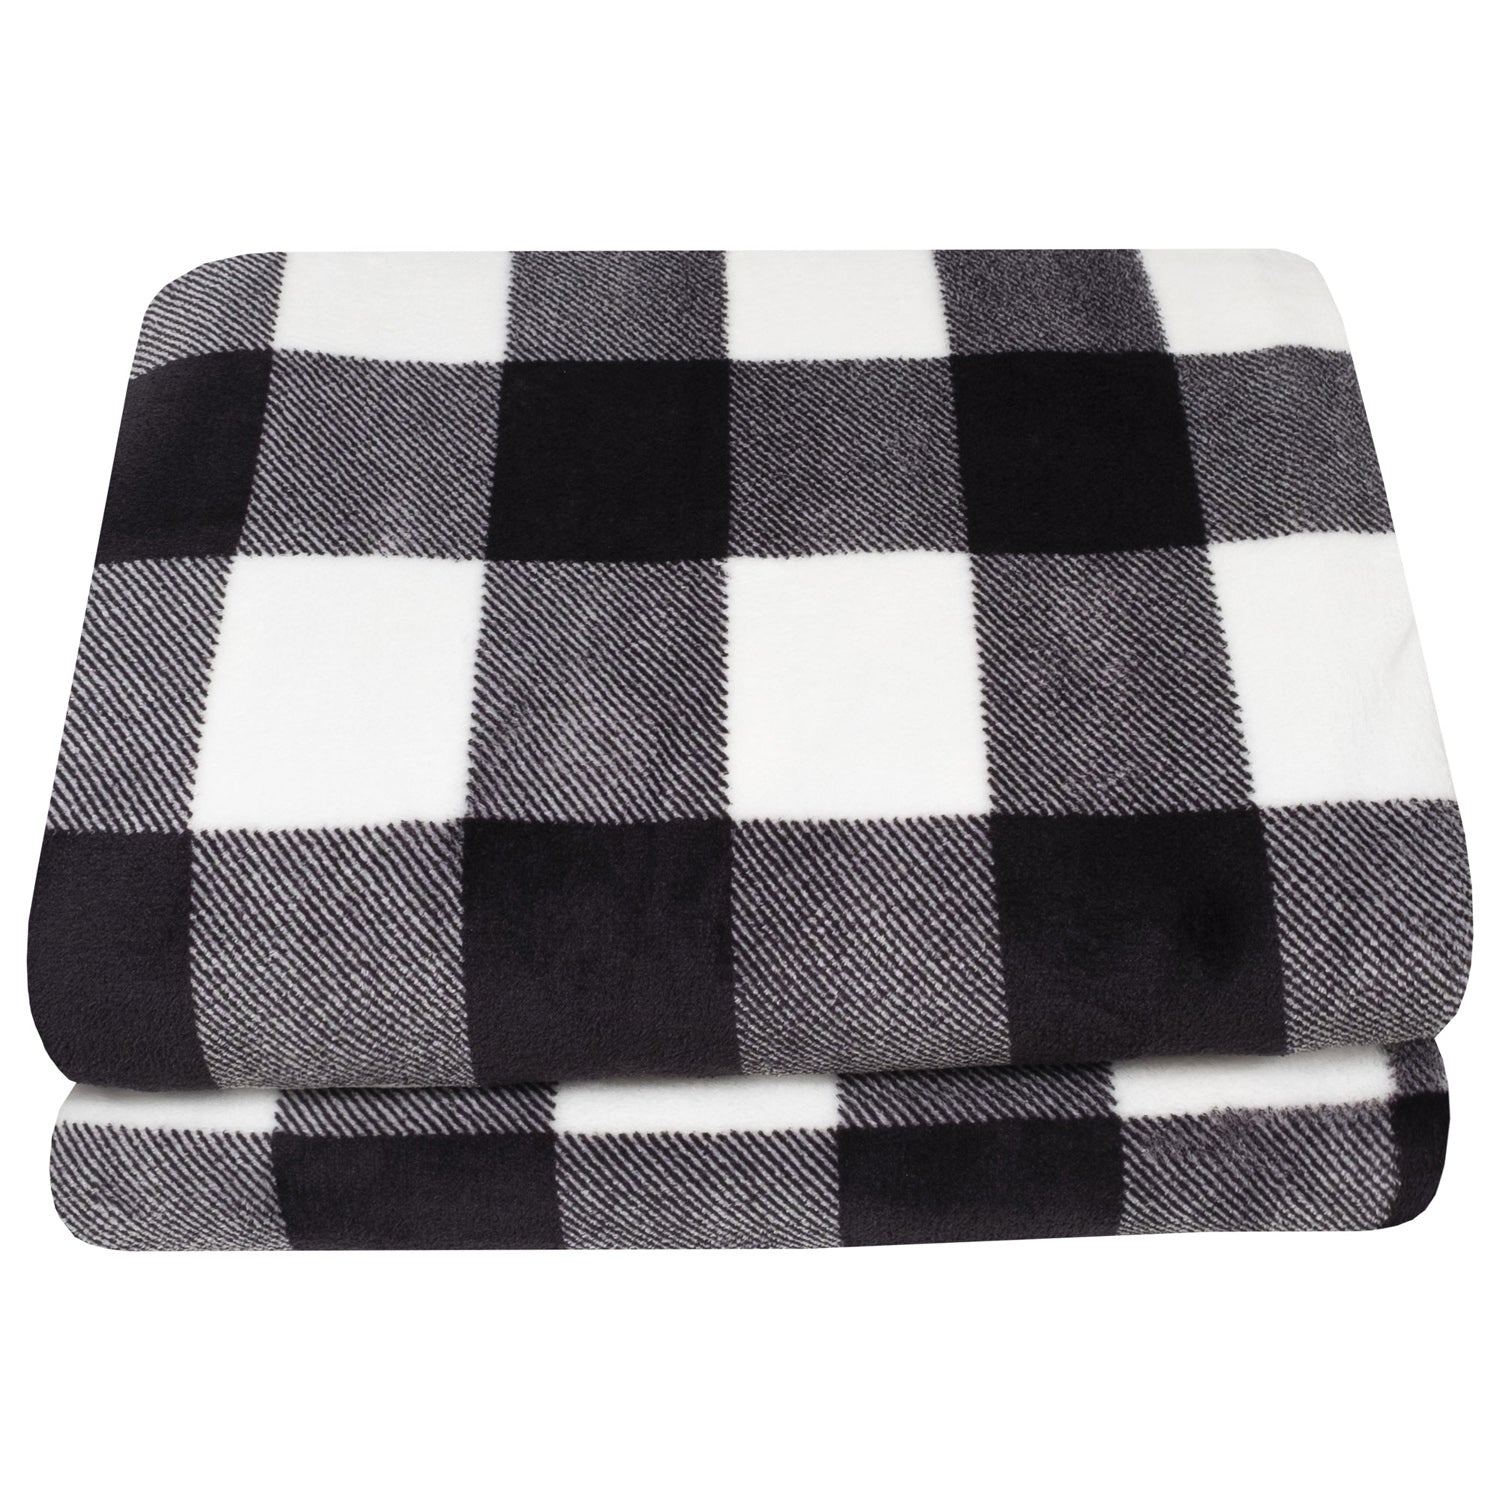 Buffalo Check Fleece Blanket Black White - Folded 2